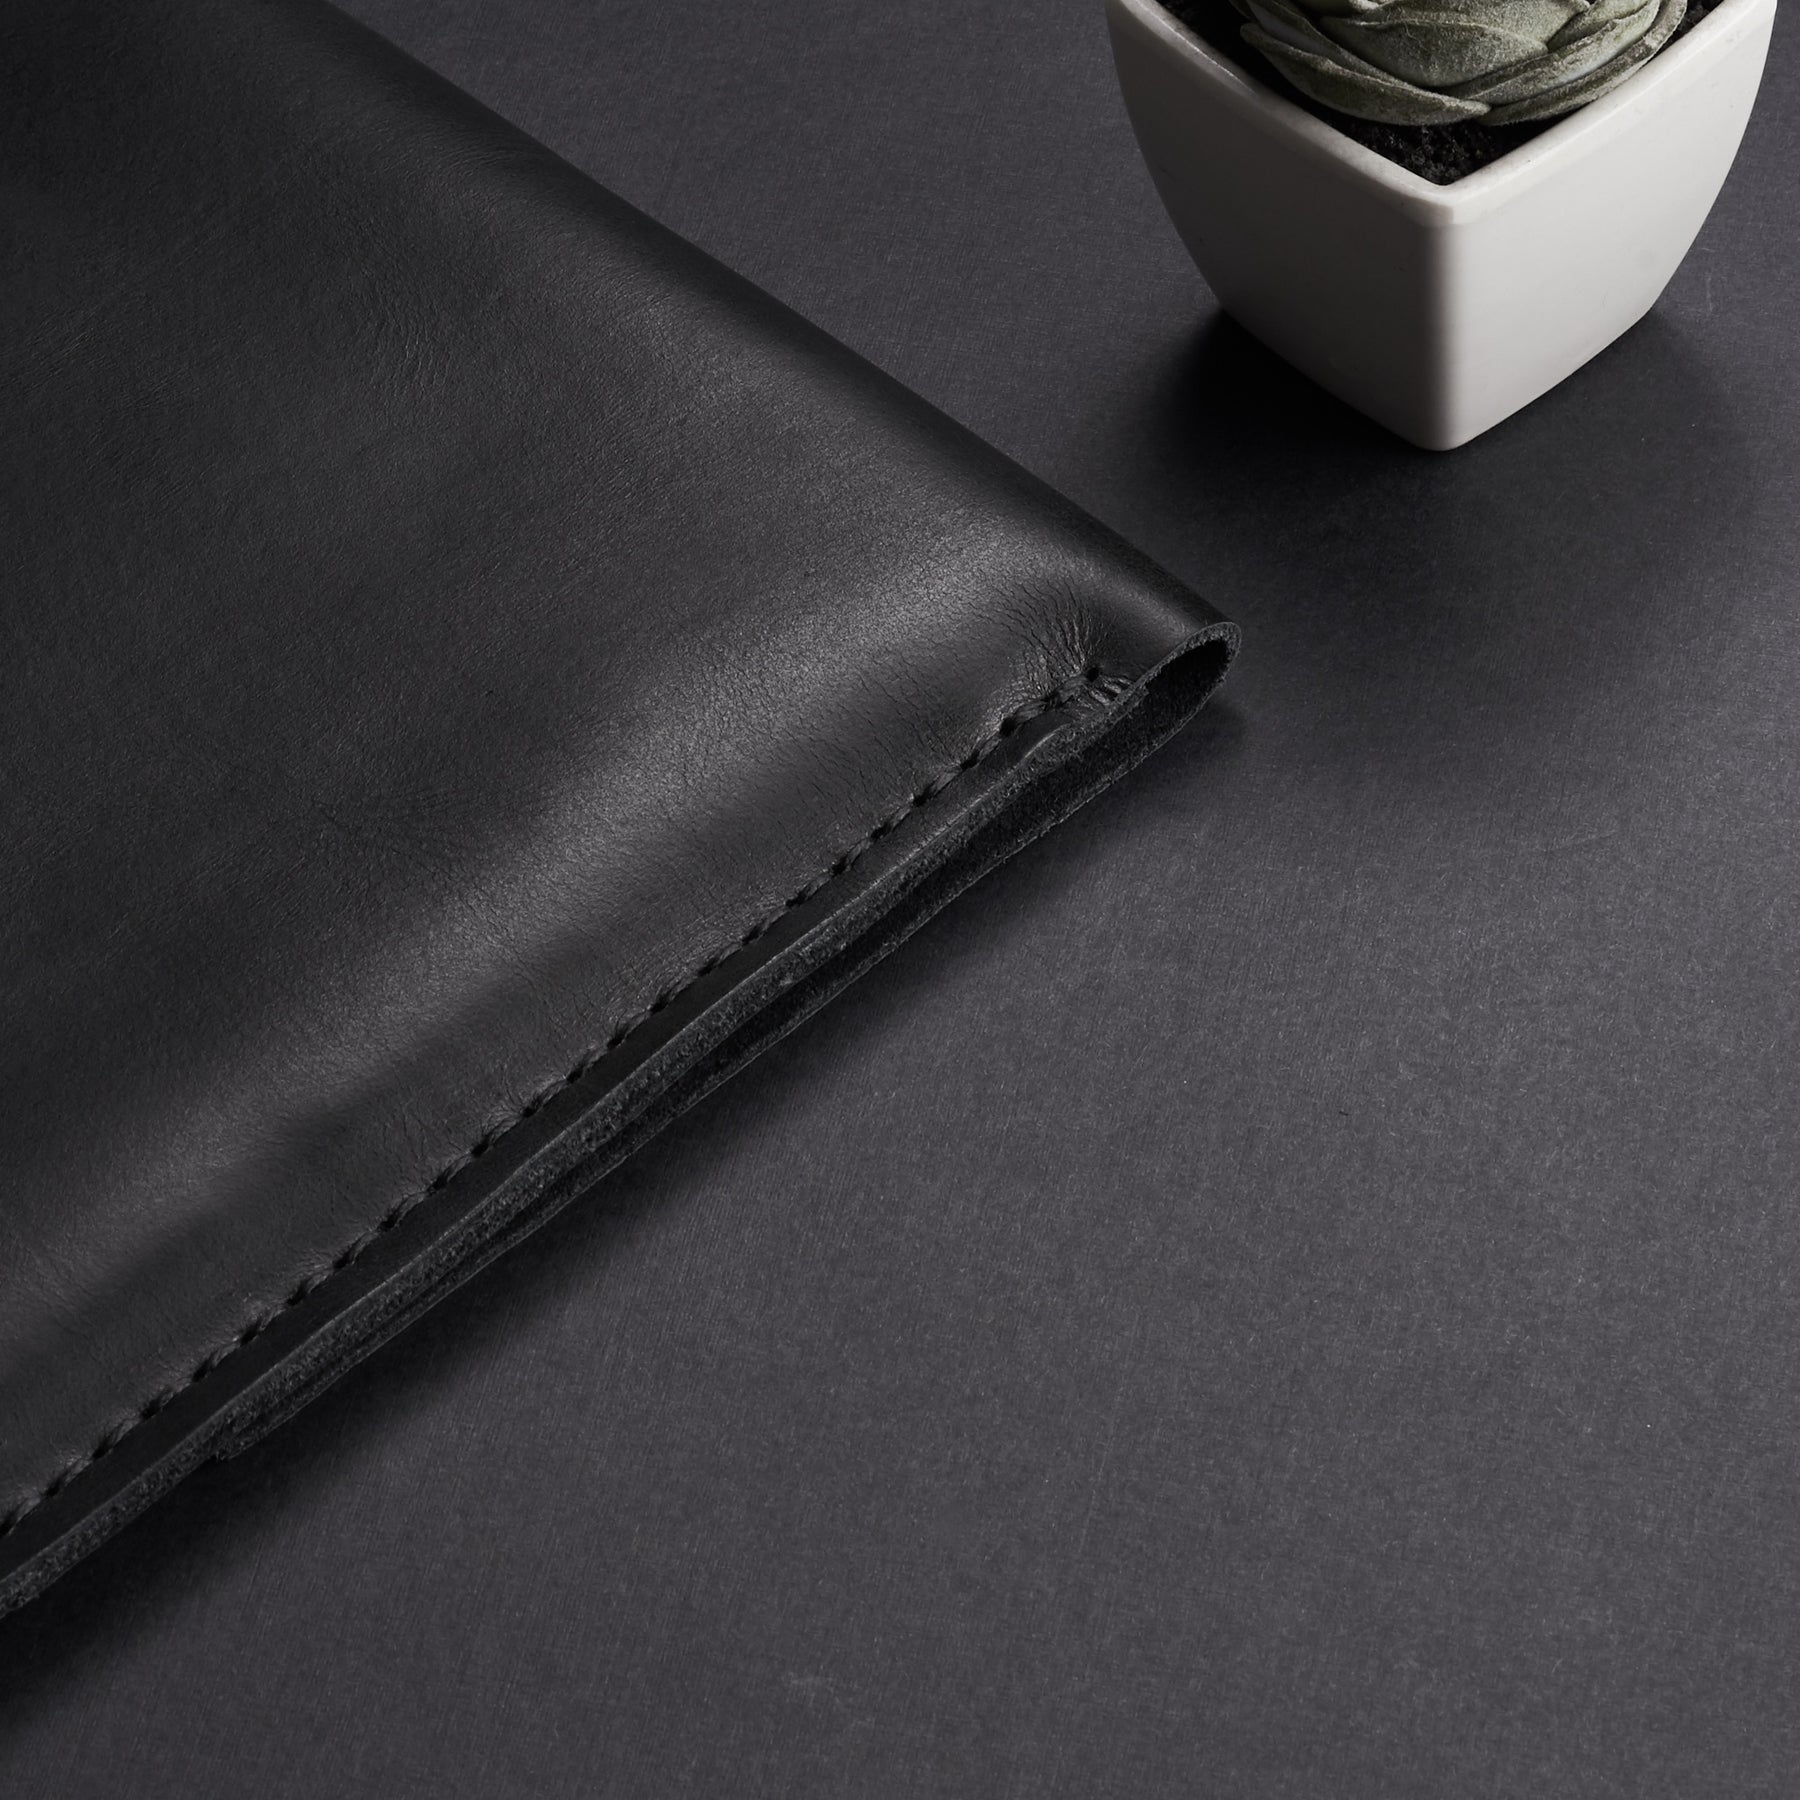 Handmade Minial iPad Case Cover Sleeve · Black by Capra Leather